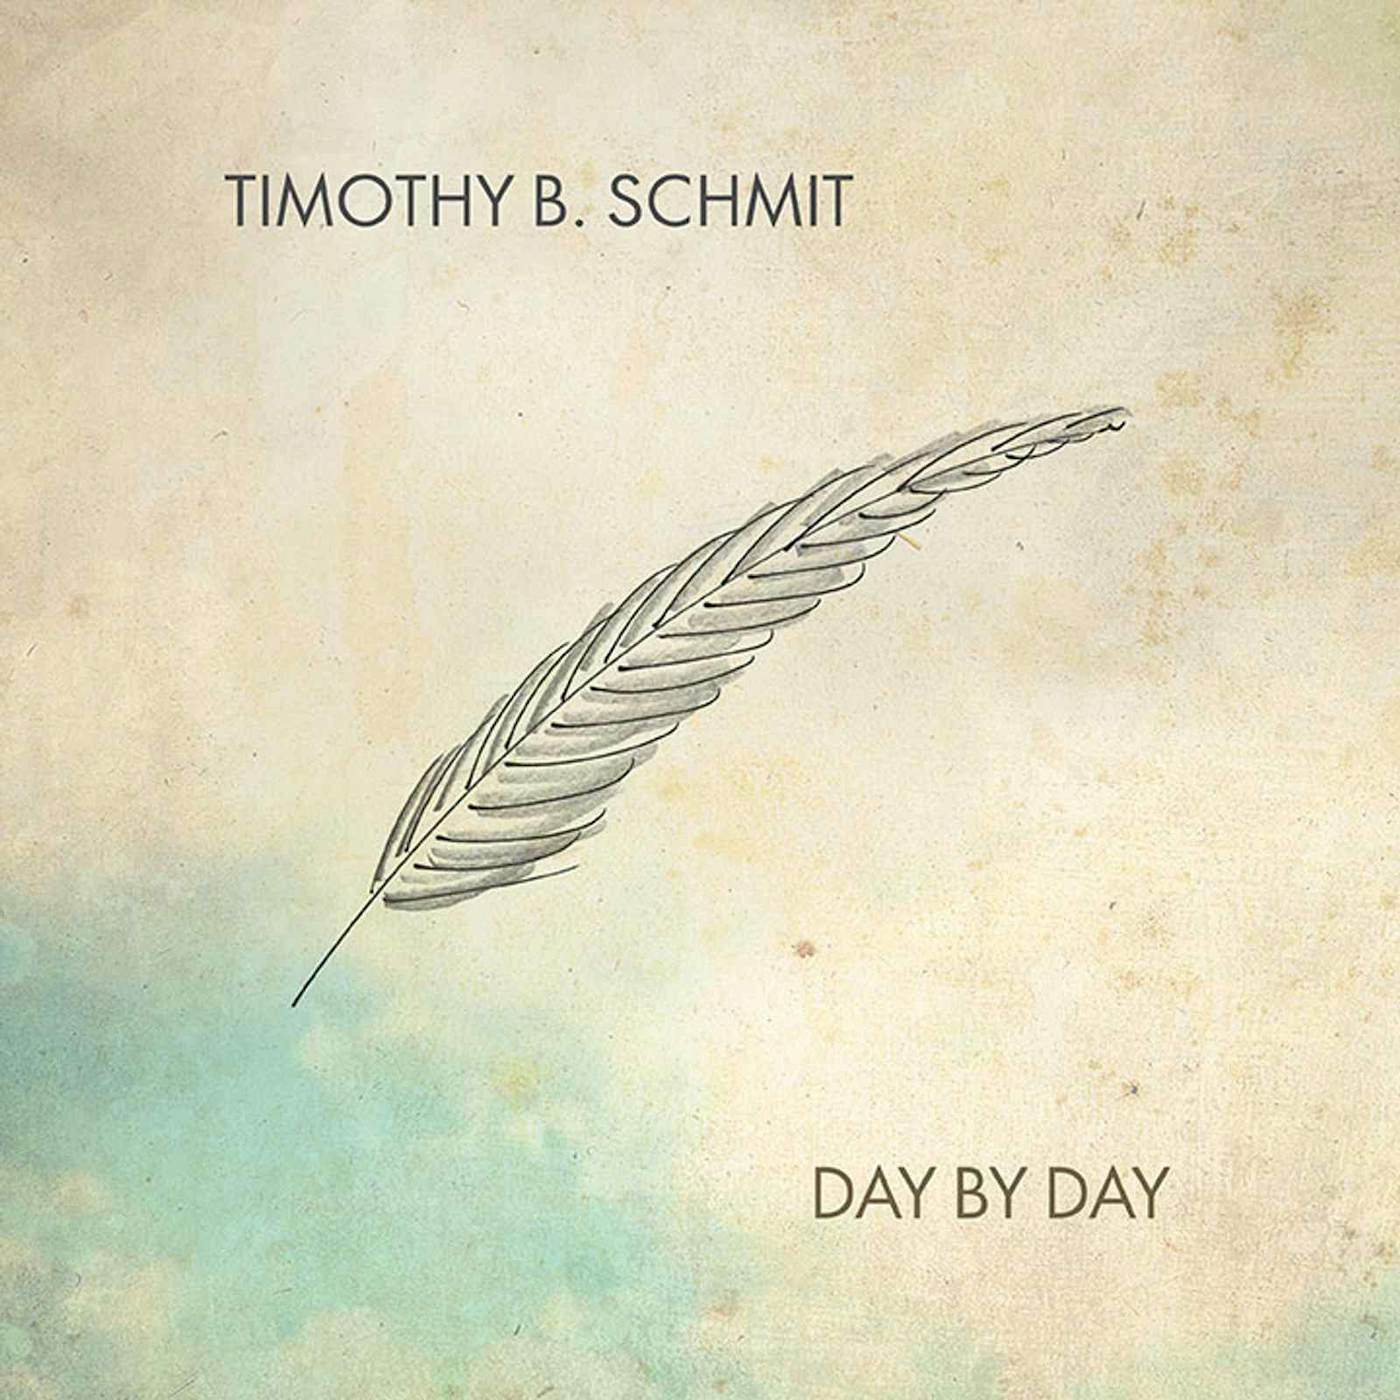 Timothy B. Schmit DAY BY DAY Vinyl Record